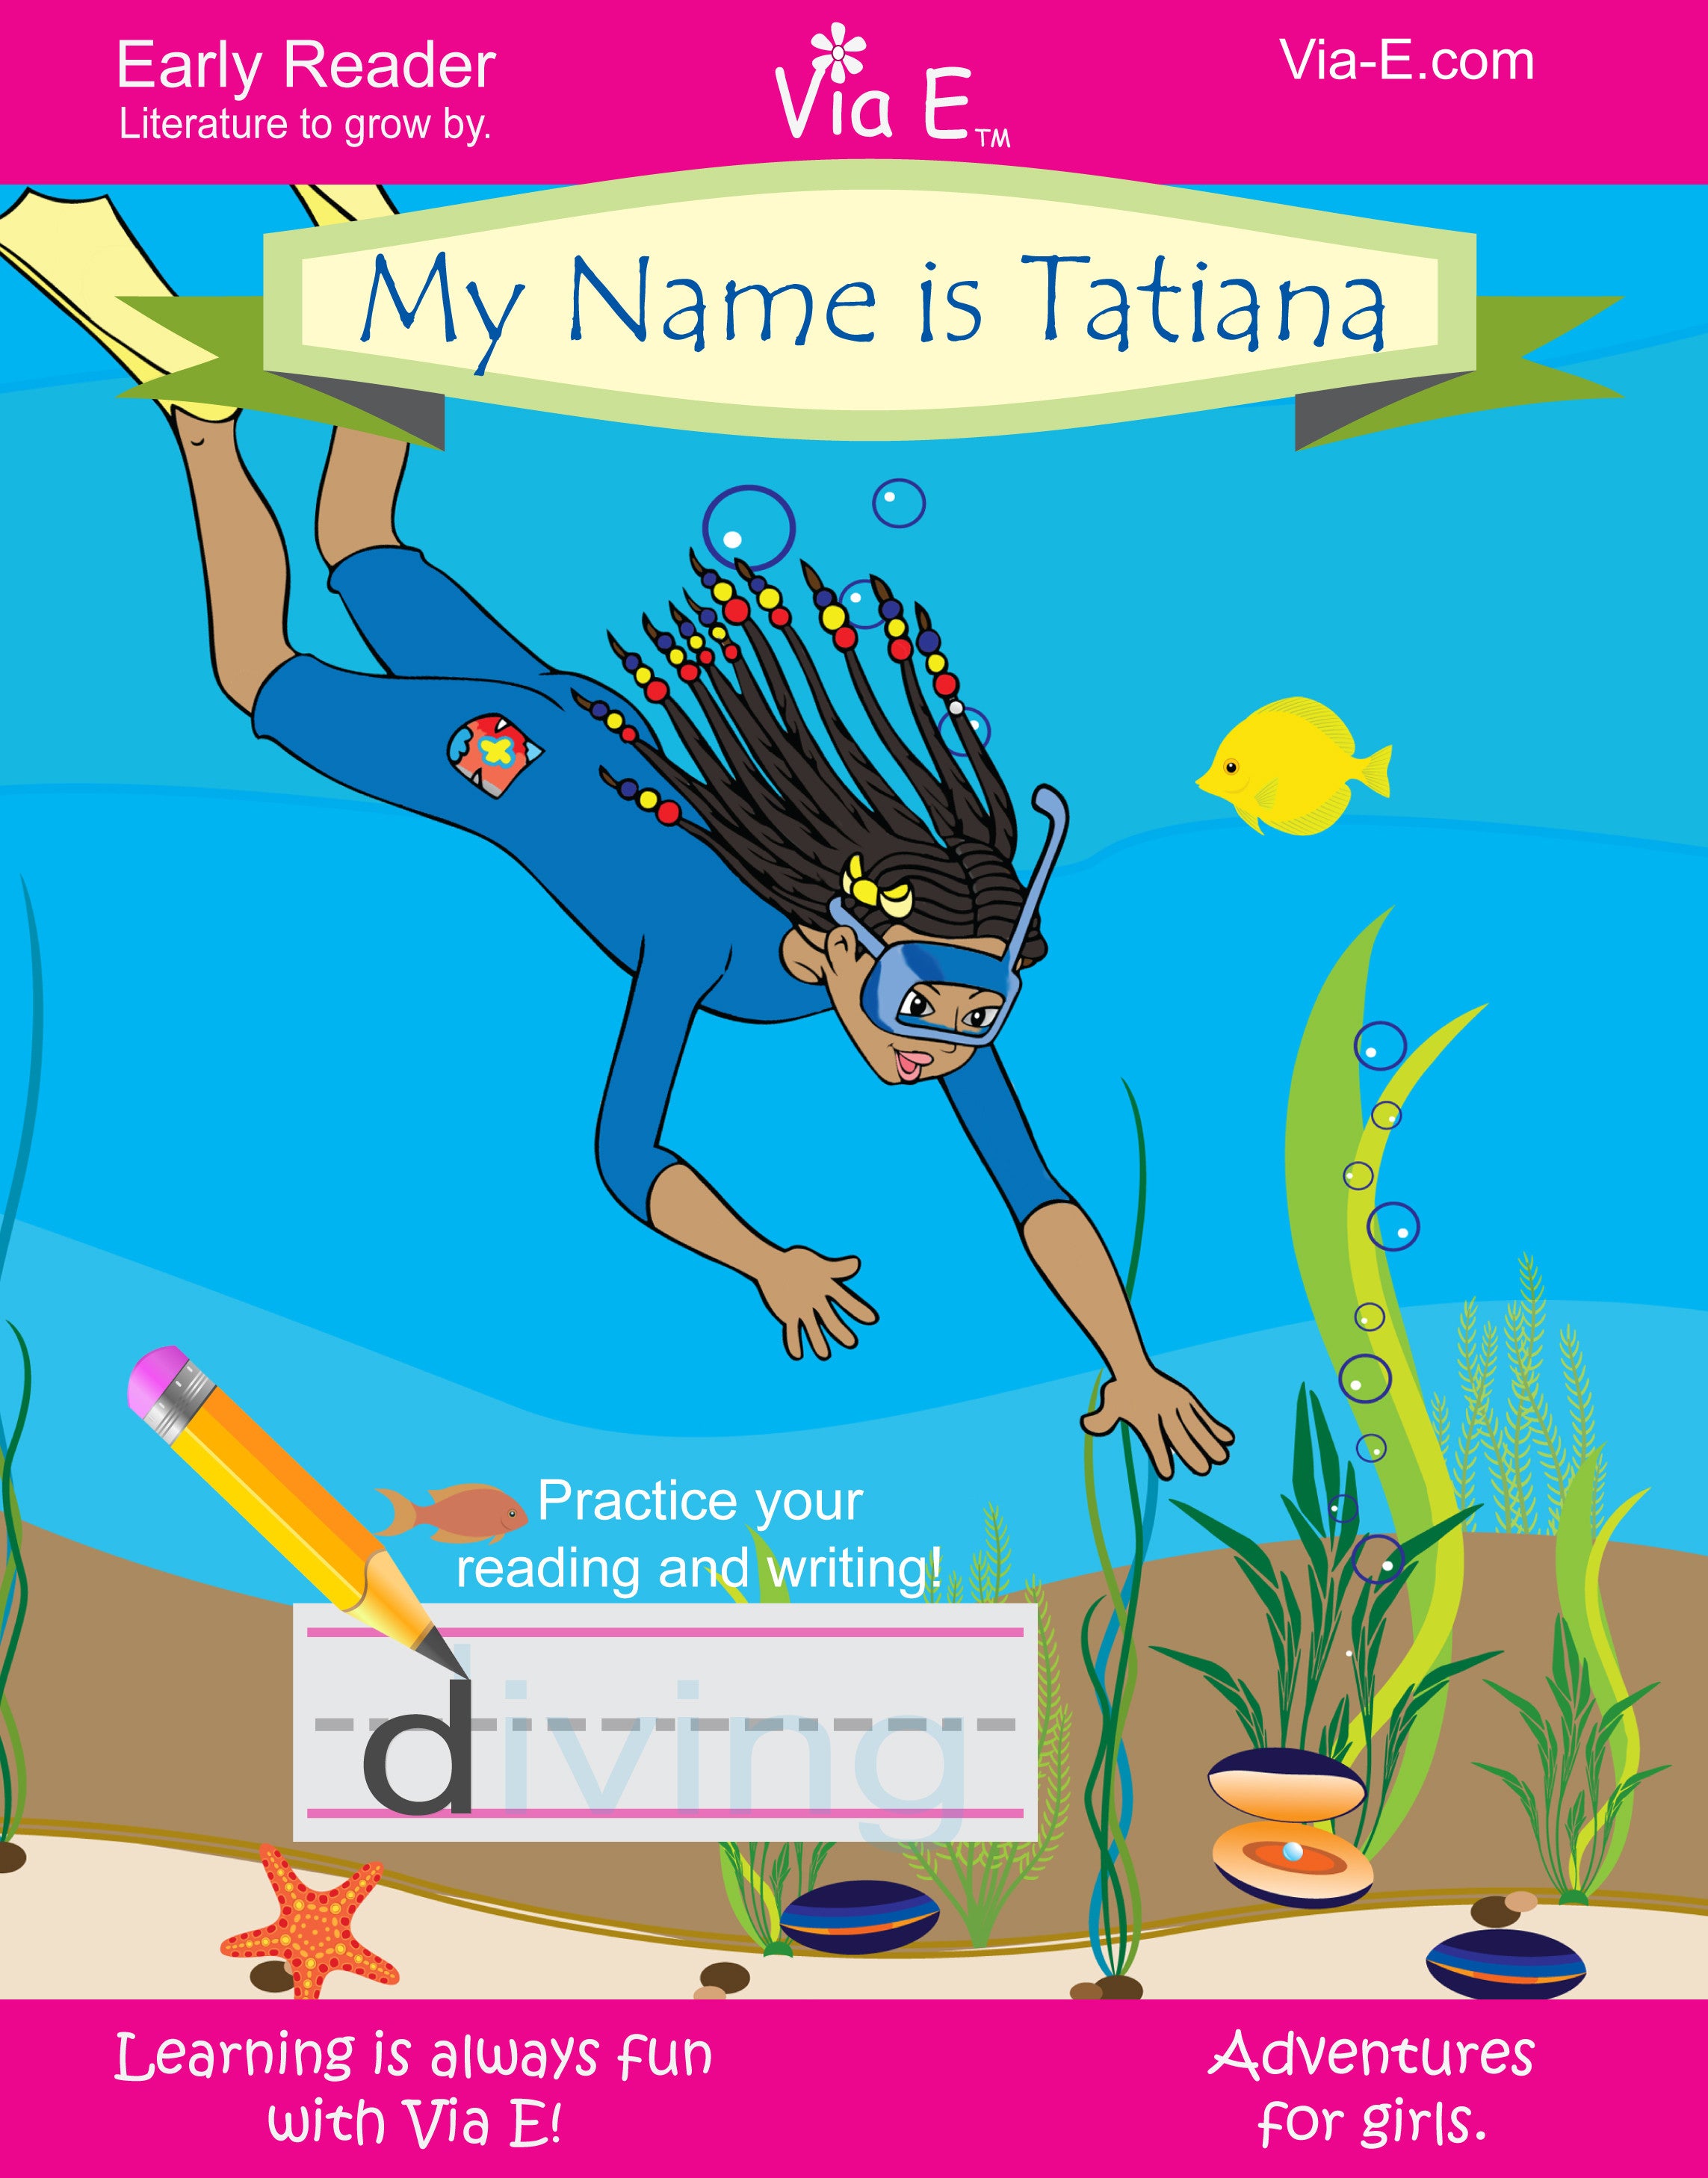 My Name is Tatiana - Early Reader